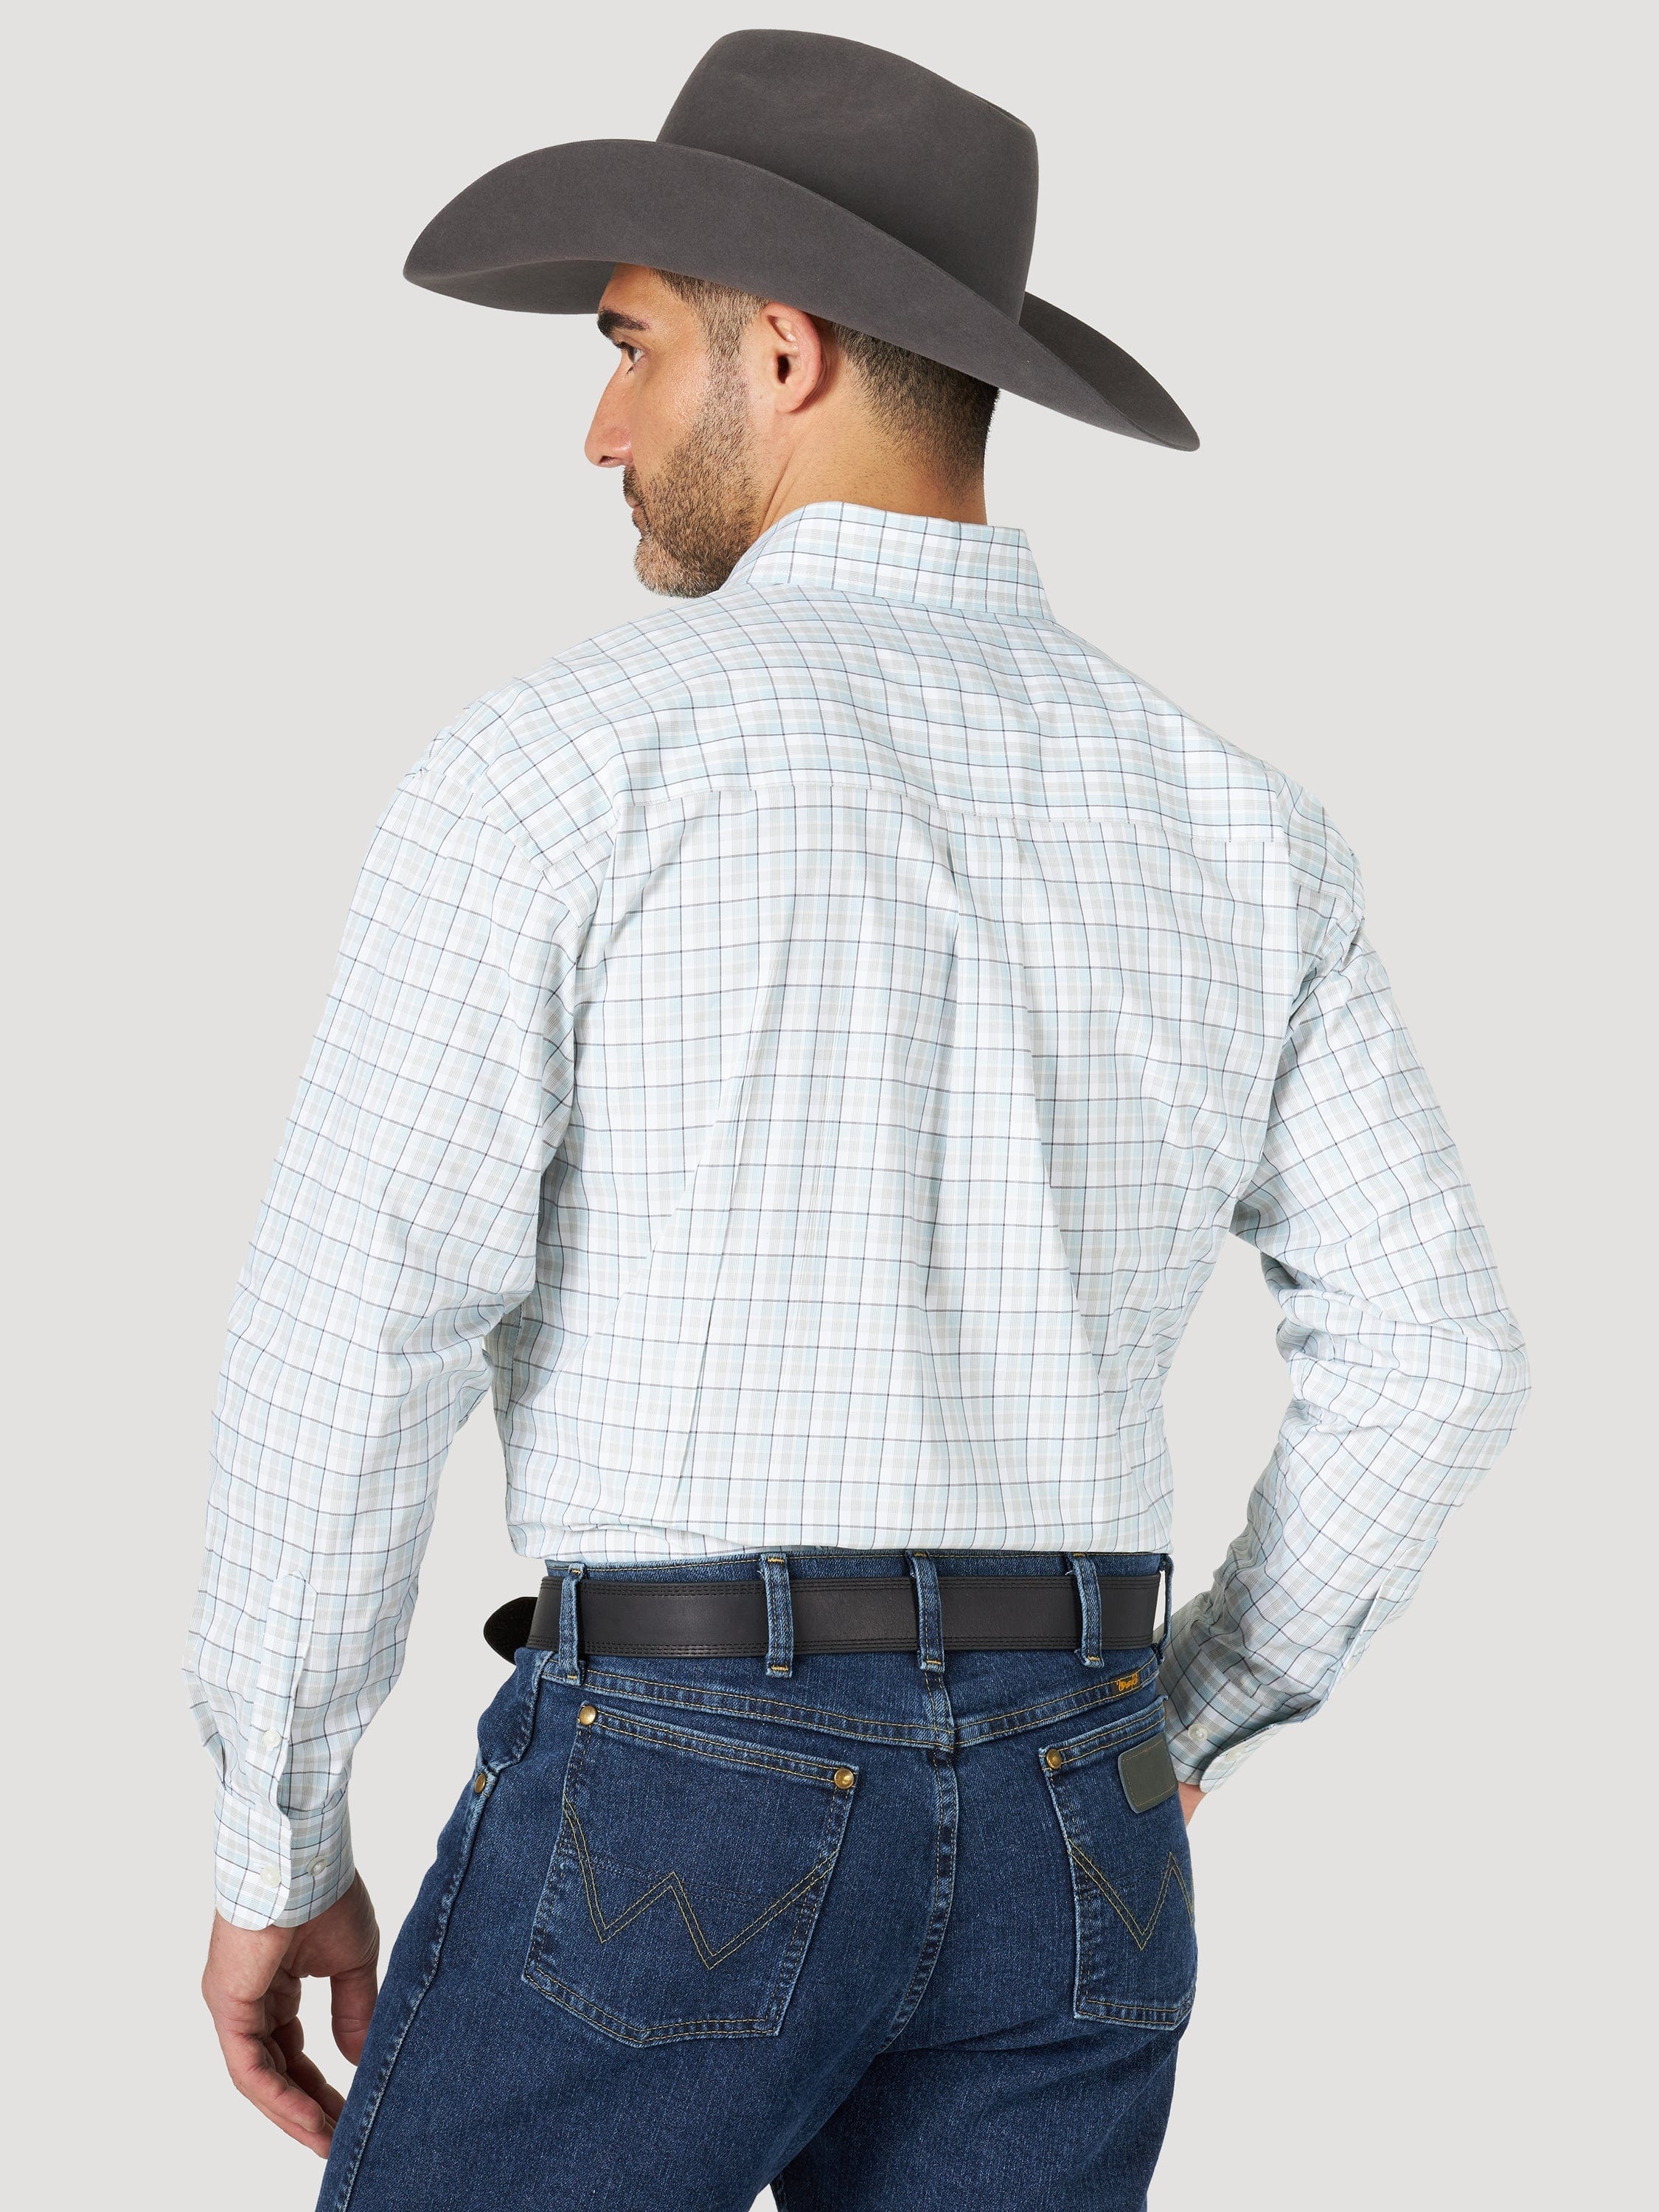 Wrangler Men's George Strait Sea/Multi Color Plaid Long Sleeve Shirt M -  Russell's Western Wear, Inc.